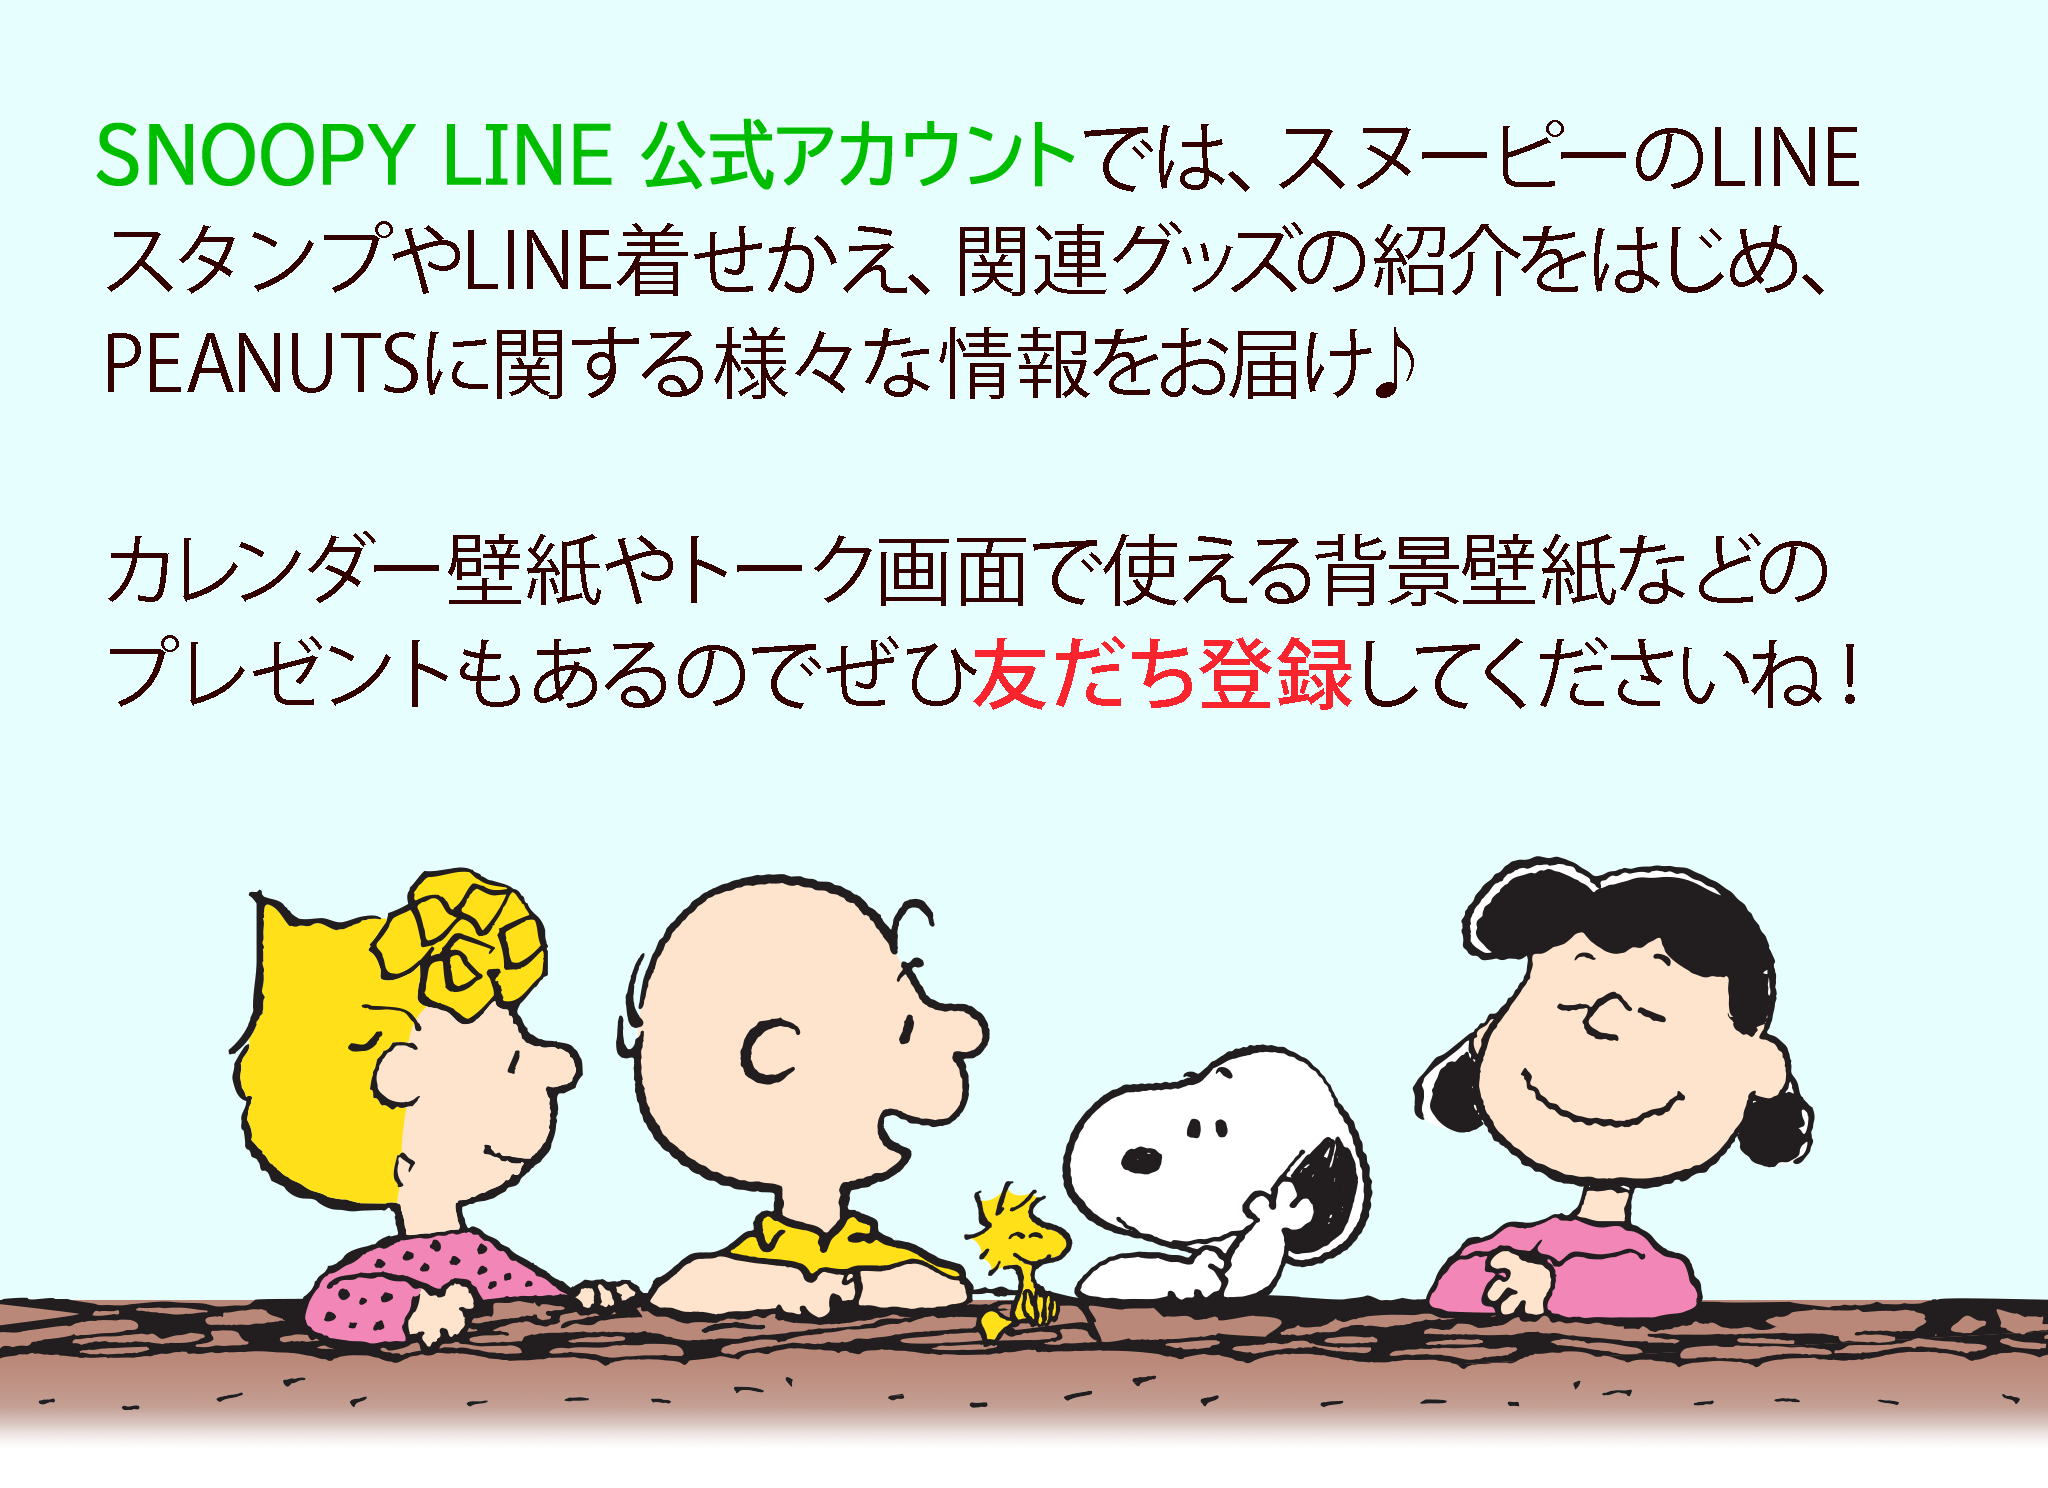 Snoopy Line公式アカウント